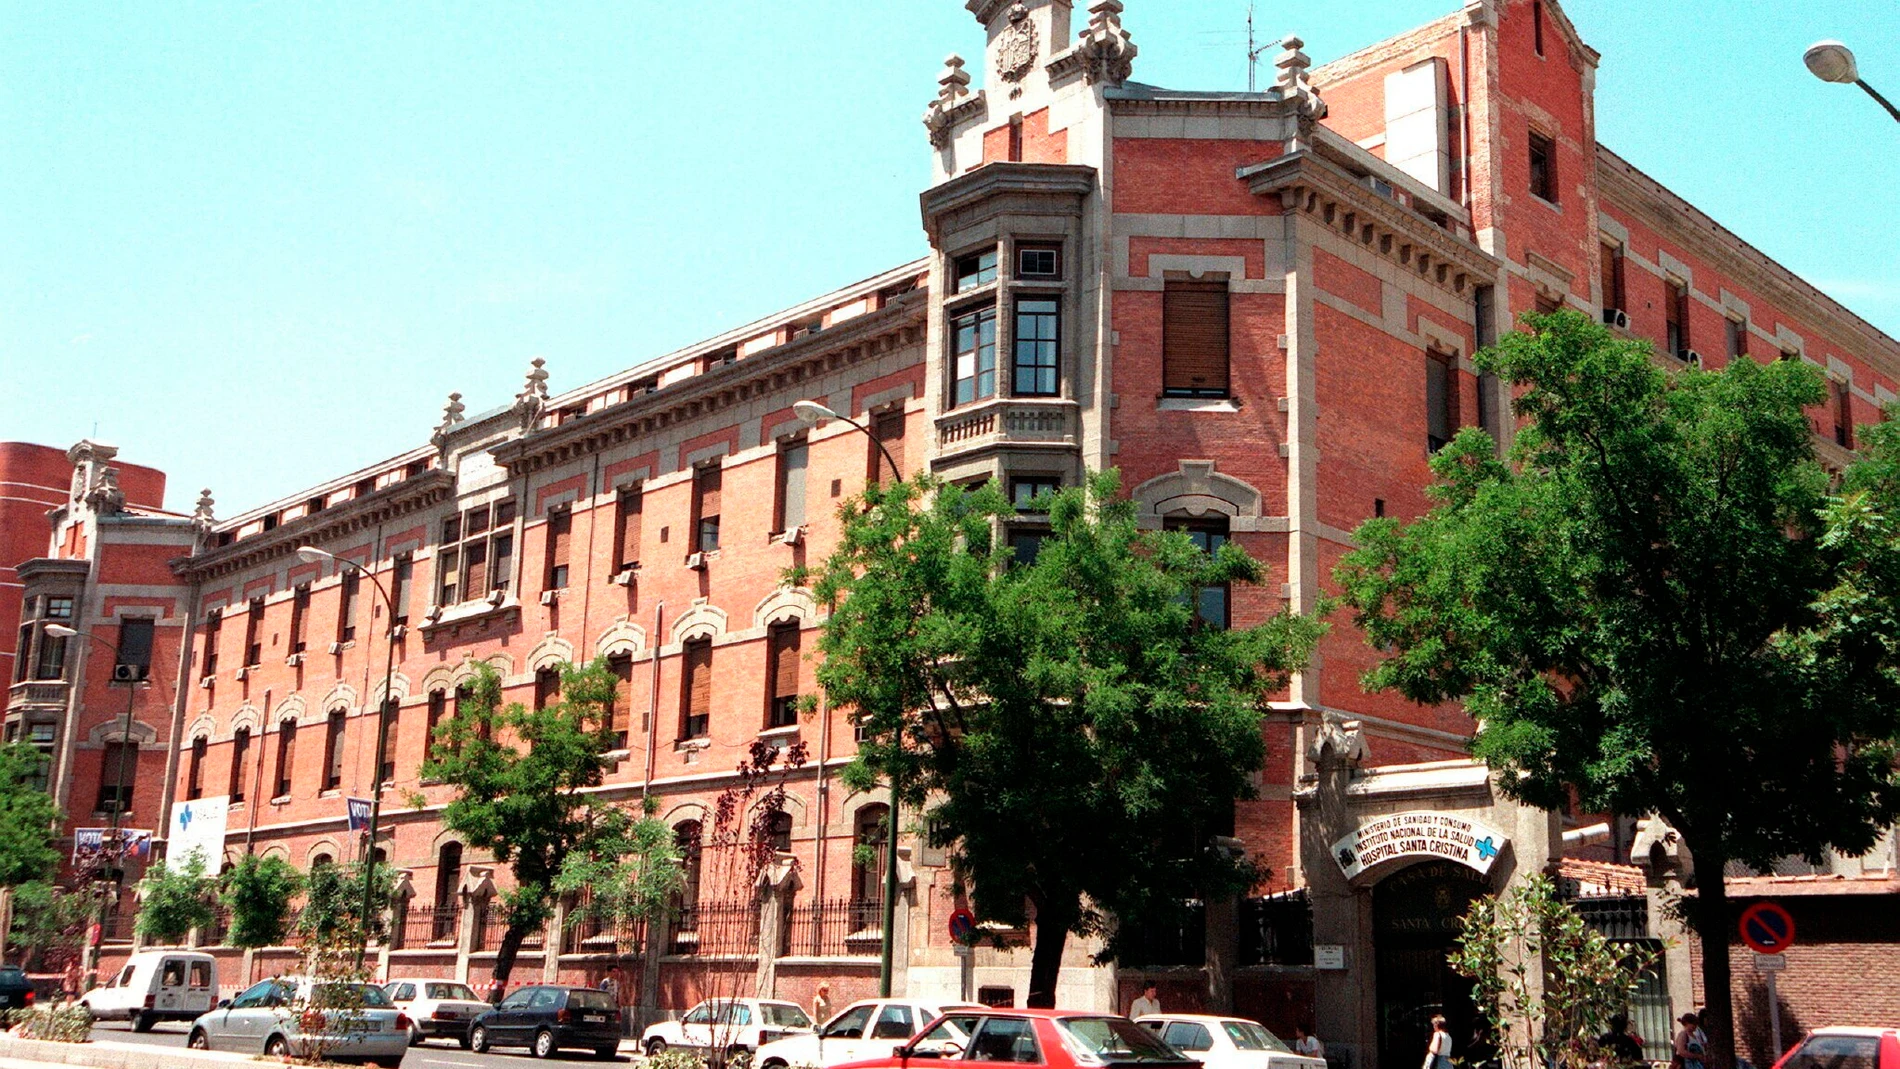 Hospital Universitario Santa Cristina